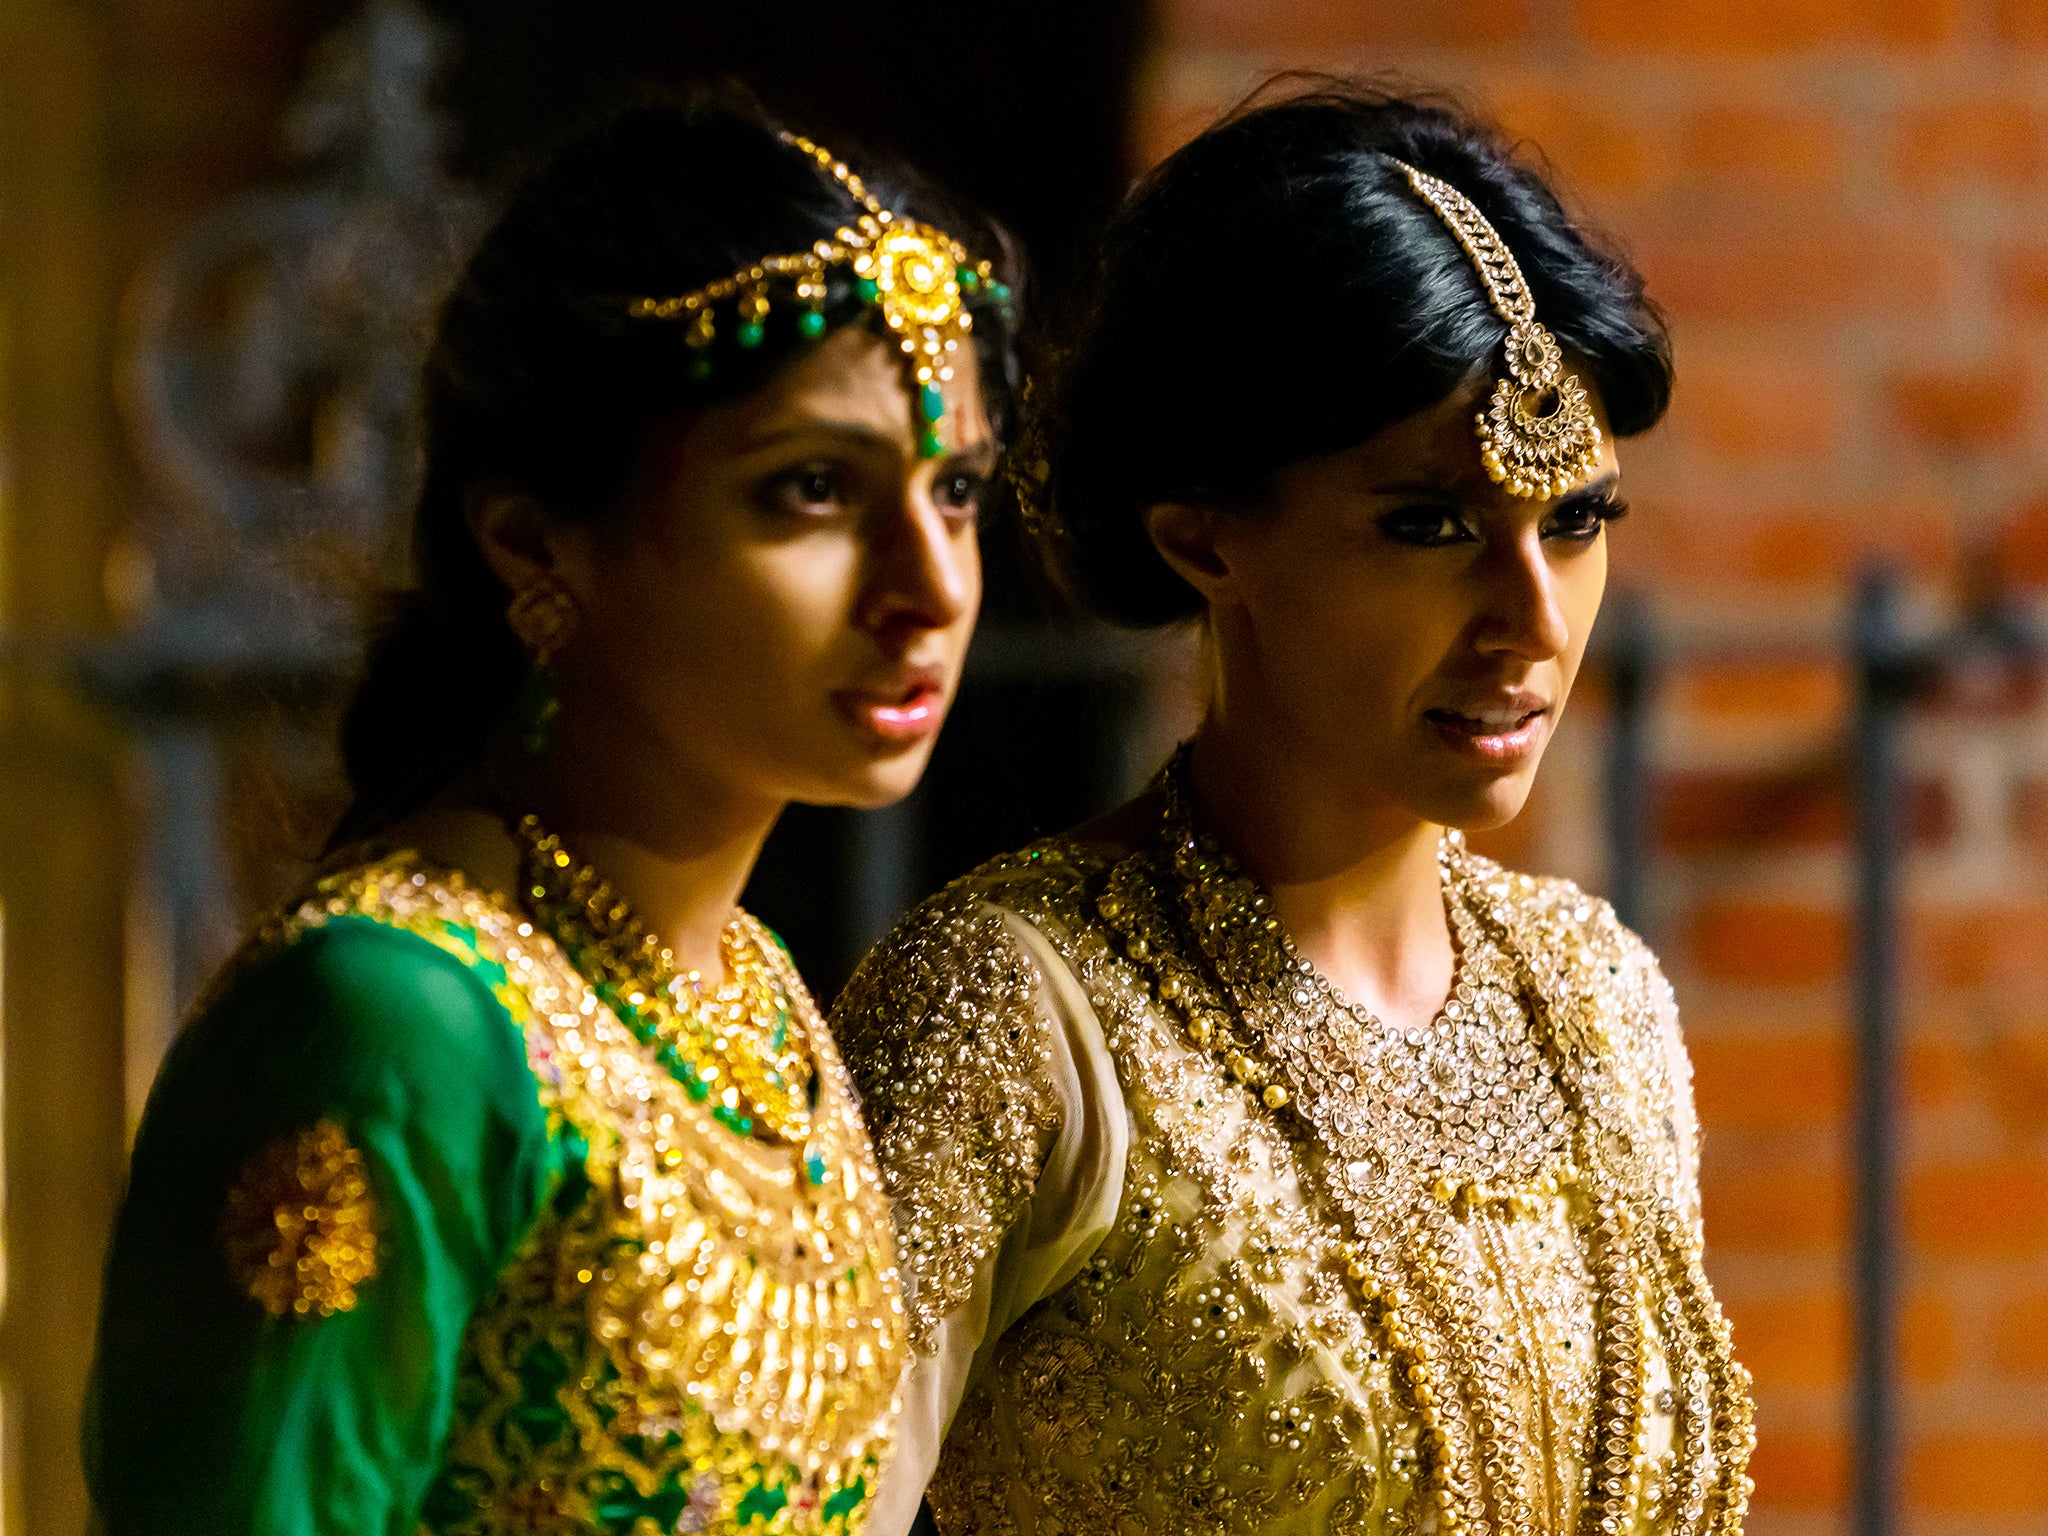 Priya Kansara and Ritu Arya in ‘Polite Society'